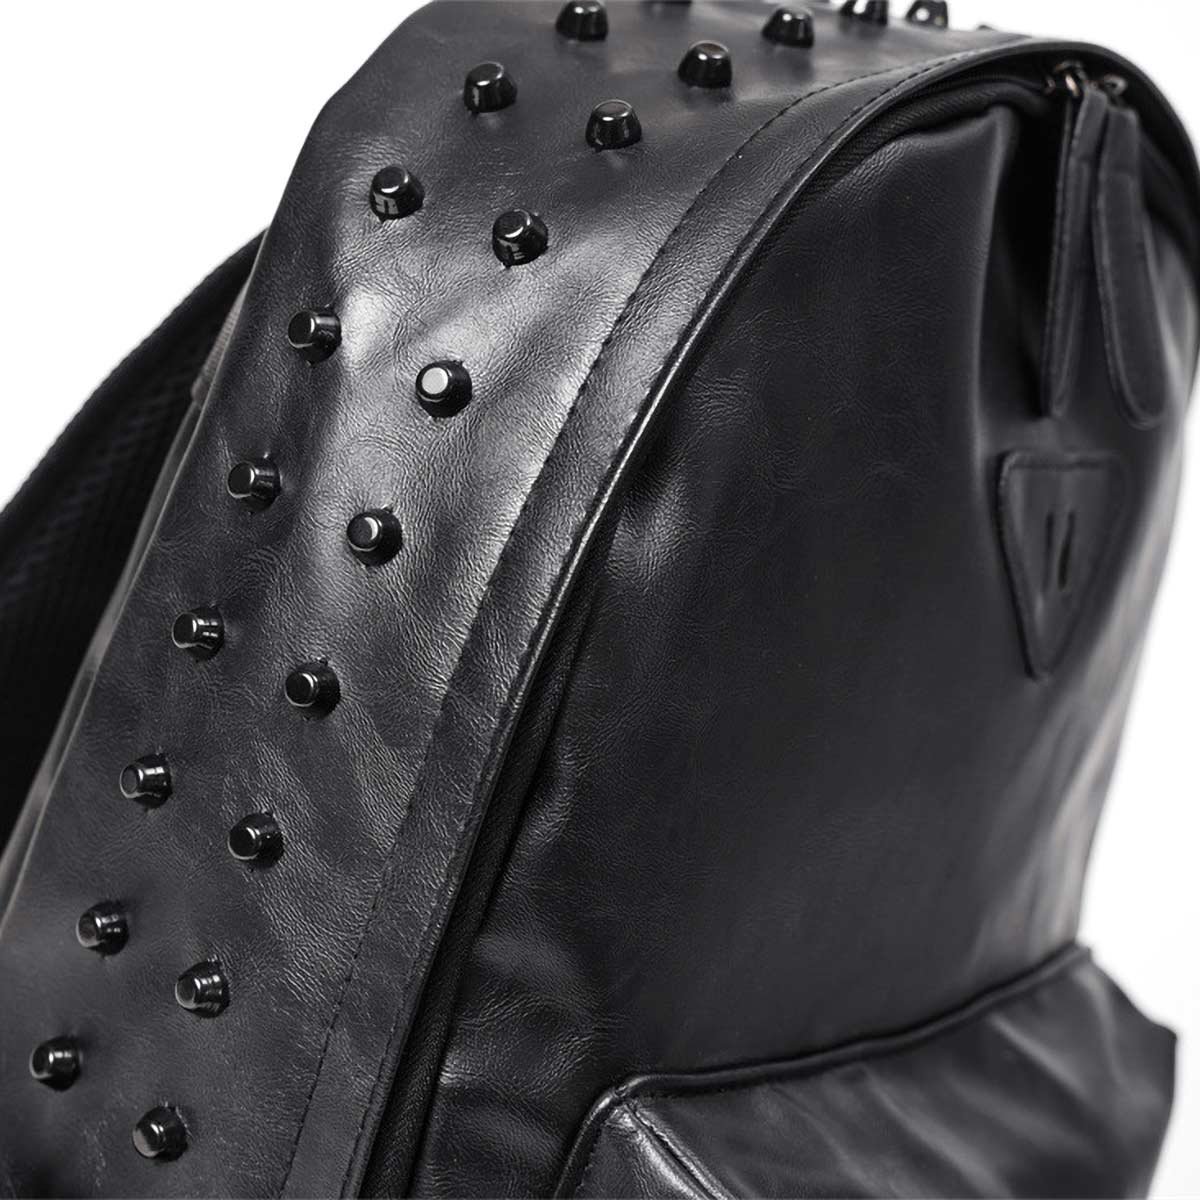 Edgy Black Backpack - Punk Inspired Design